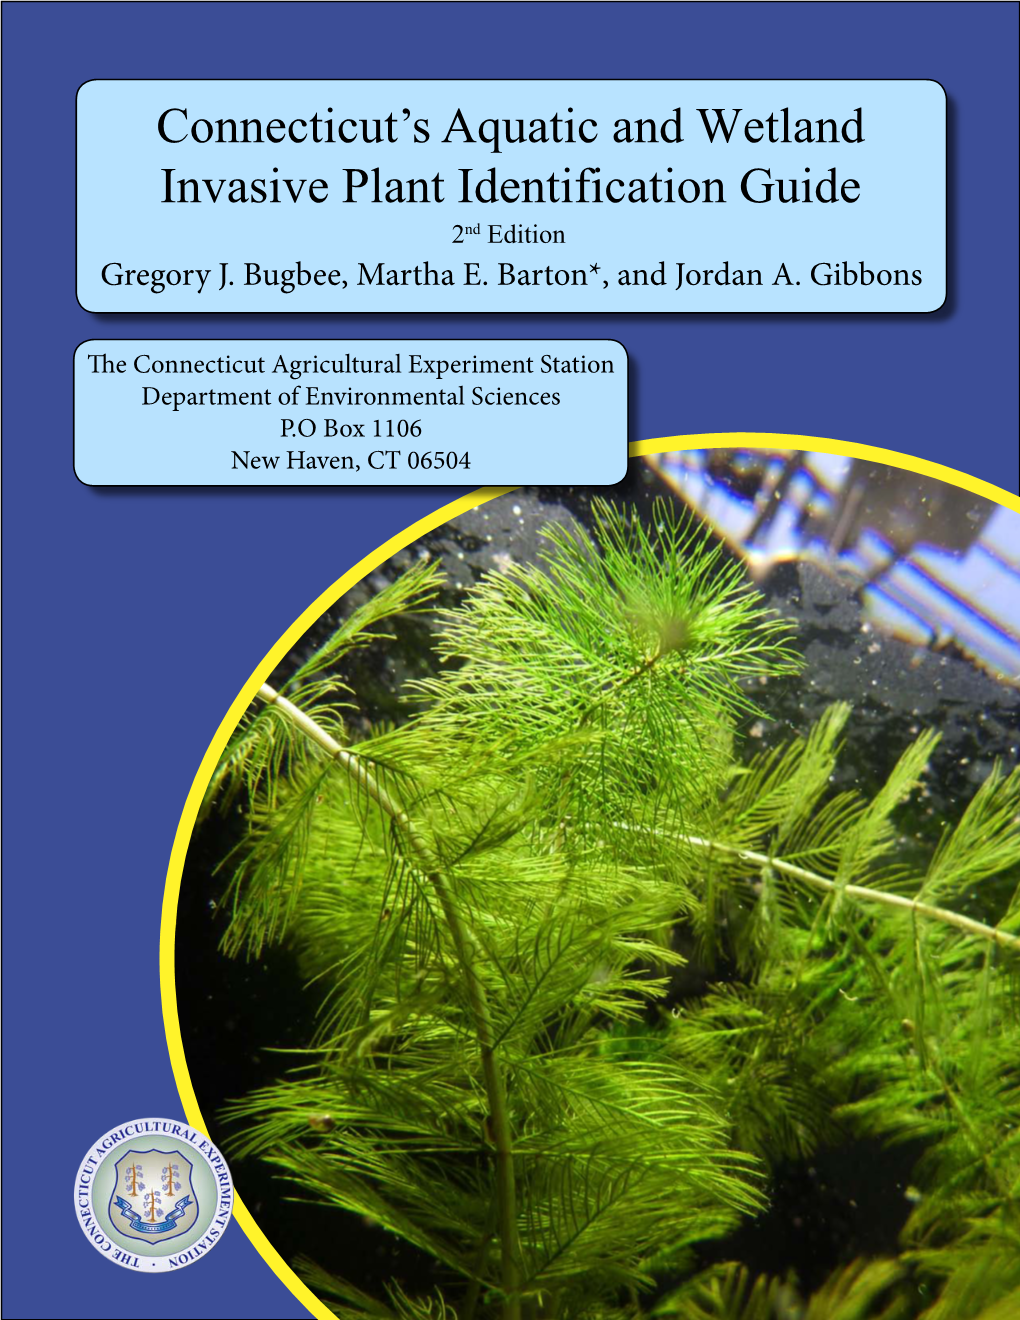 Connecticut's Aquatic and Wetland Invasive Plant Identification Guide